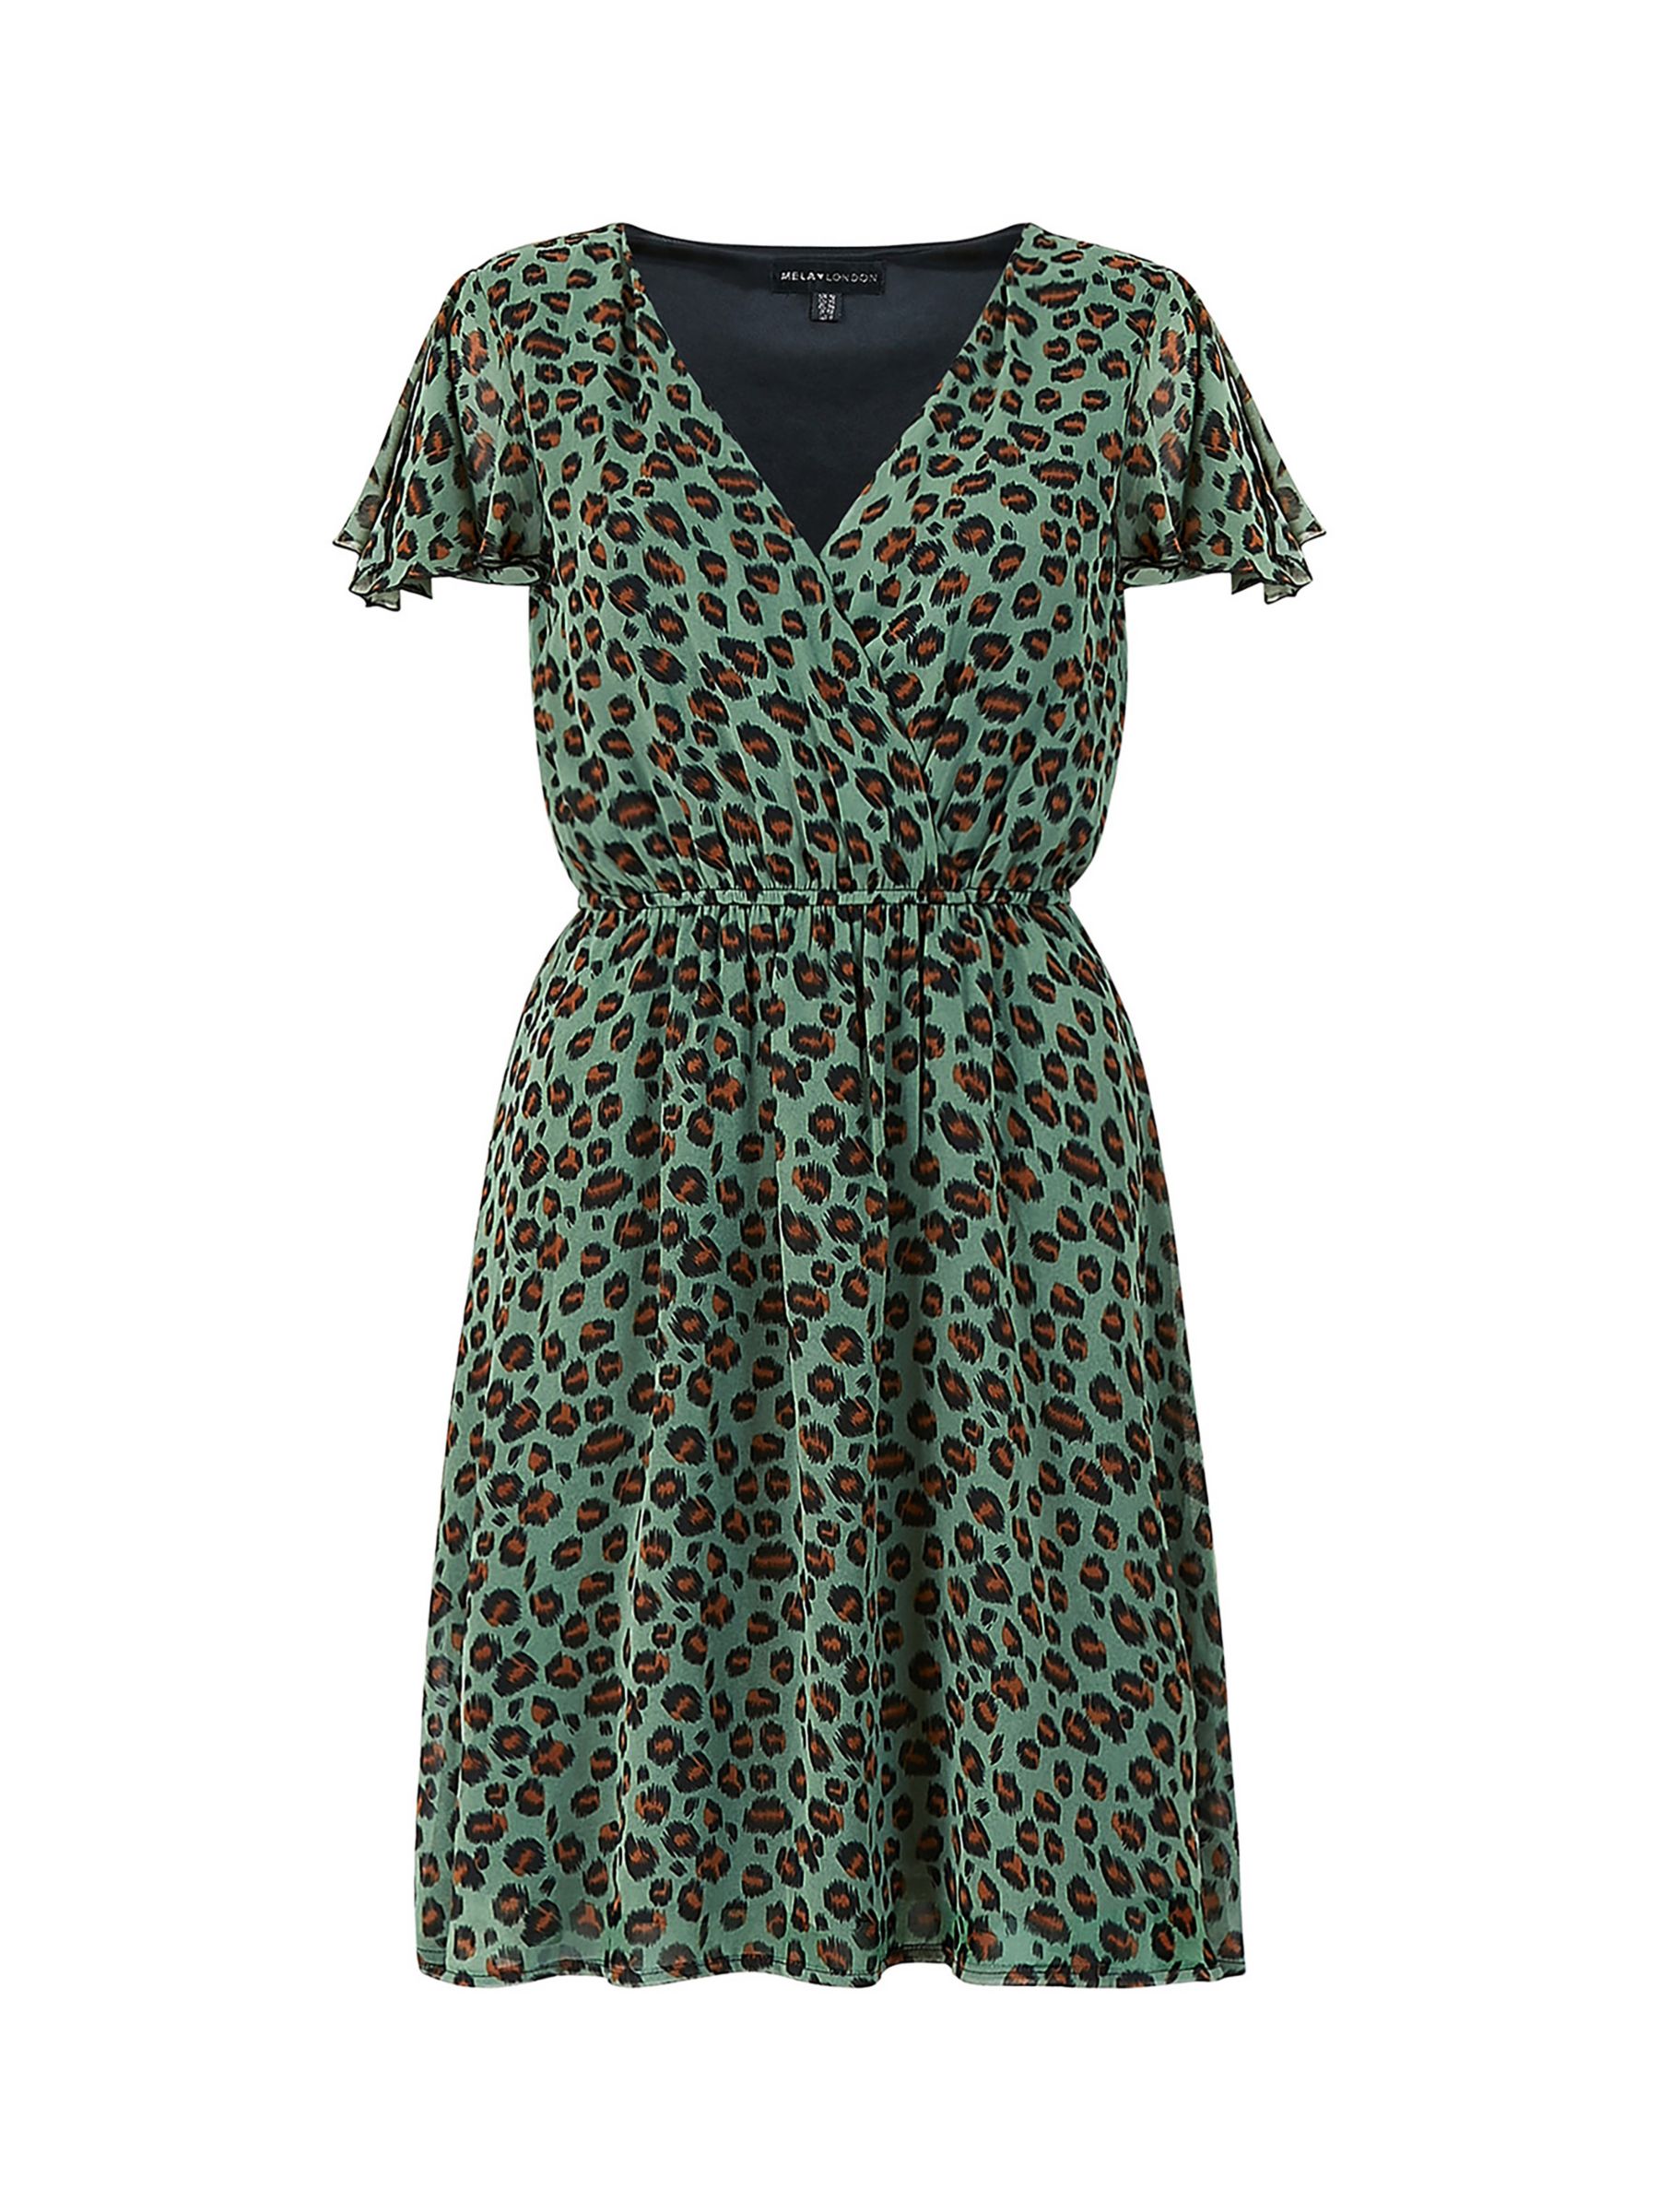 Mela London Leopard Print Wrap Skater Mini Dress, Green/Multi, 8